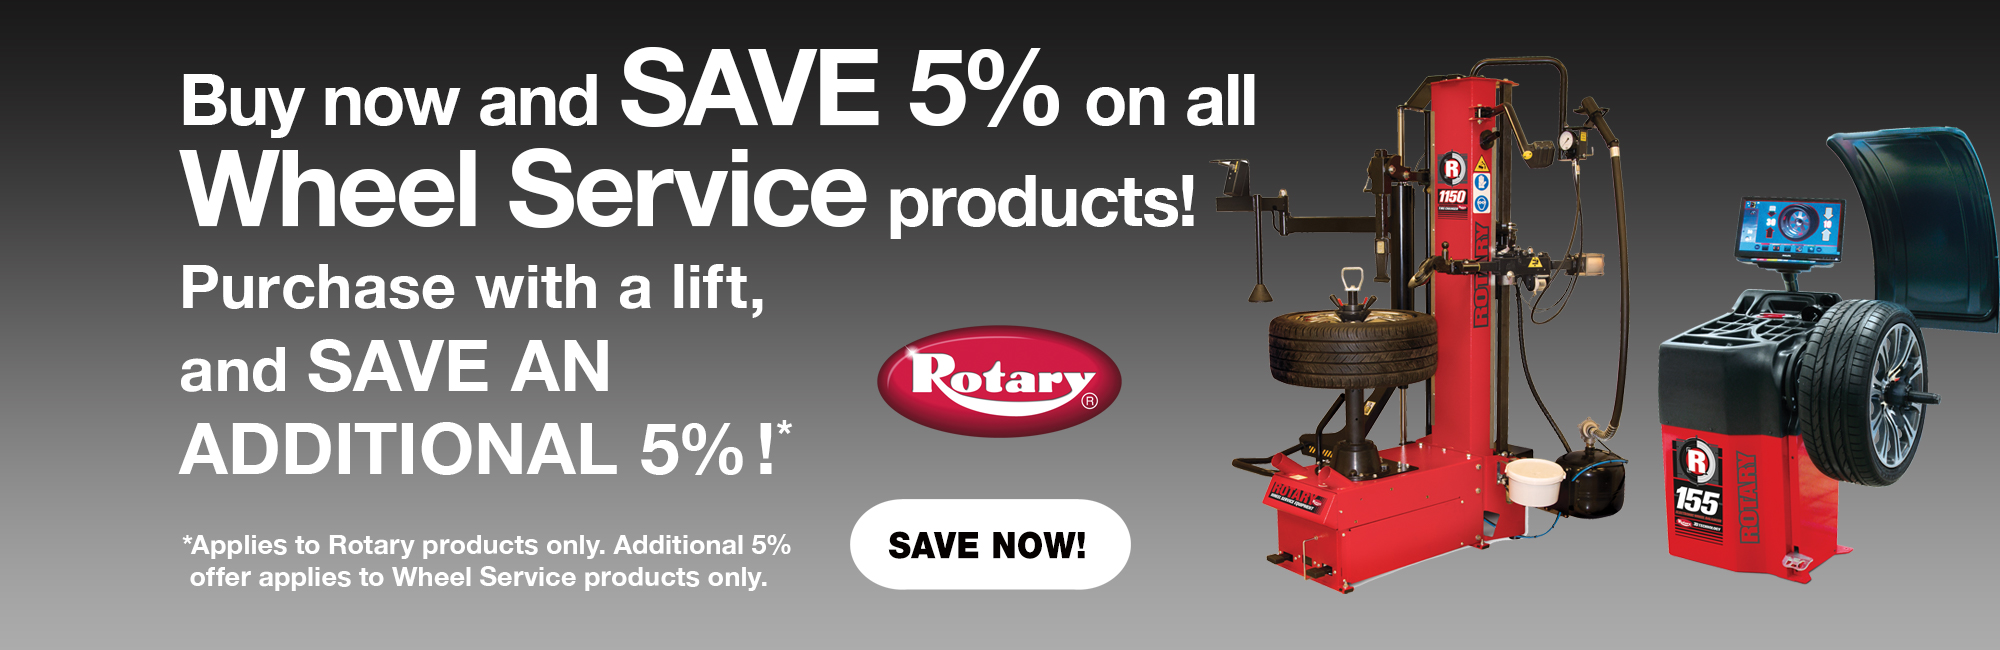 Save 5% on Rotary wheel service!